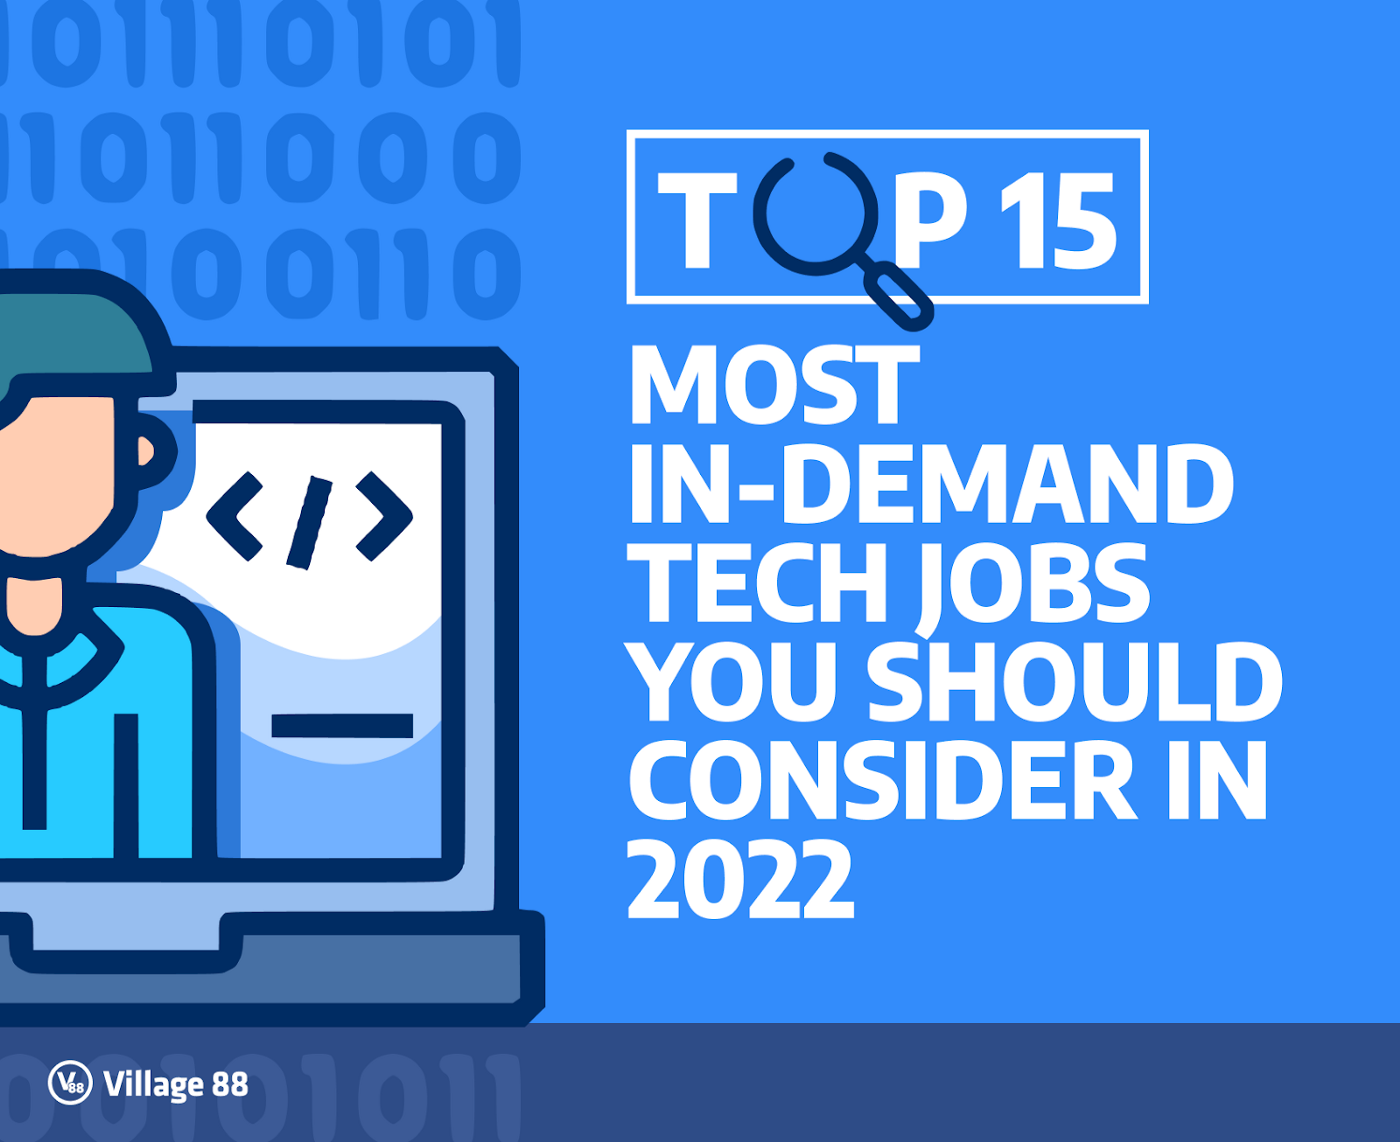 Top 15 Most In-Demand Tech Jobs You Should Consider in 2022 (According to Glassdoor Ranking)